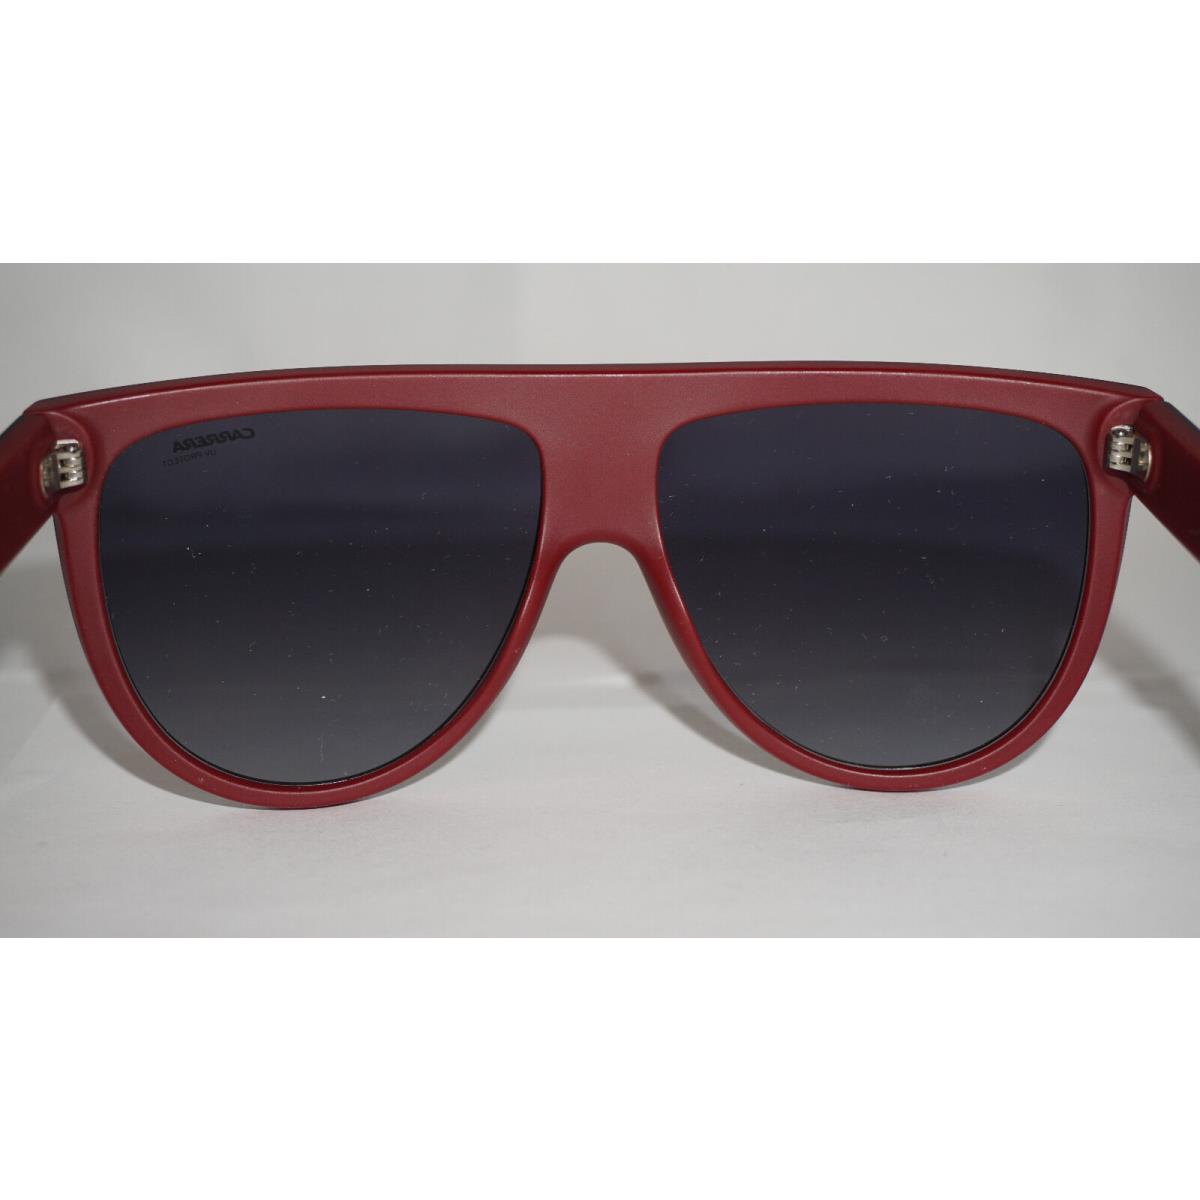 Carrera sunglasses  - Black Red Side Shields , Matte Black Red Frame, Grey Gradient Lens 9